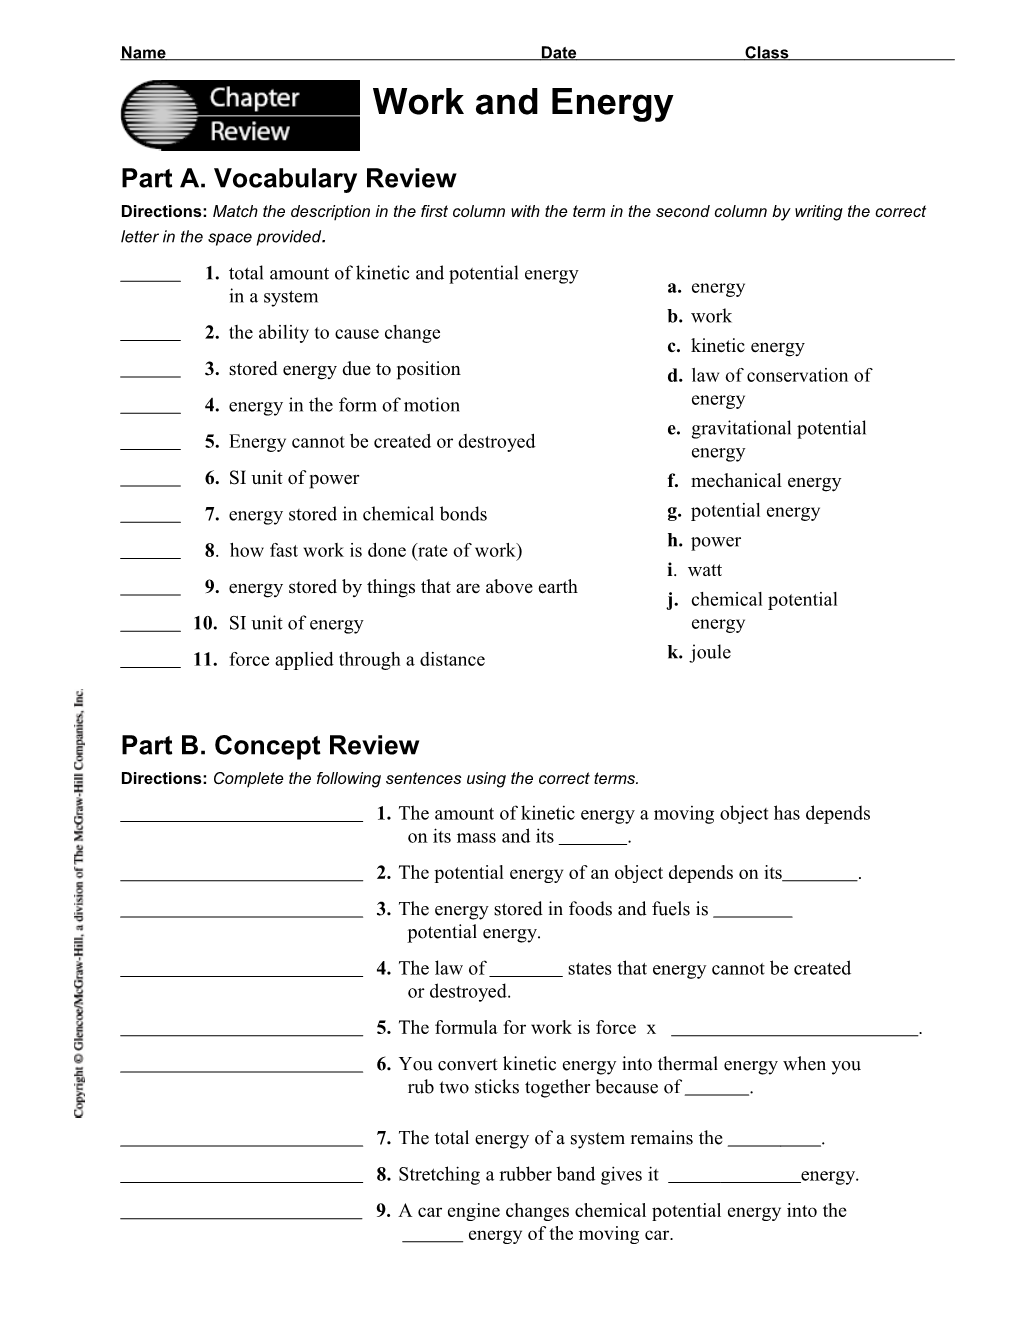 Part A. Vocabulary Review